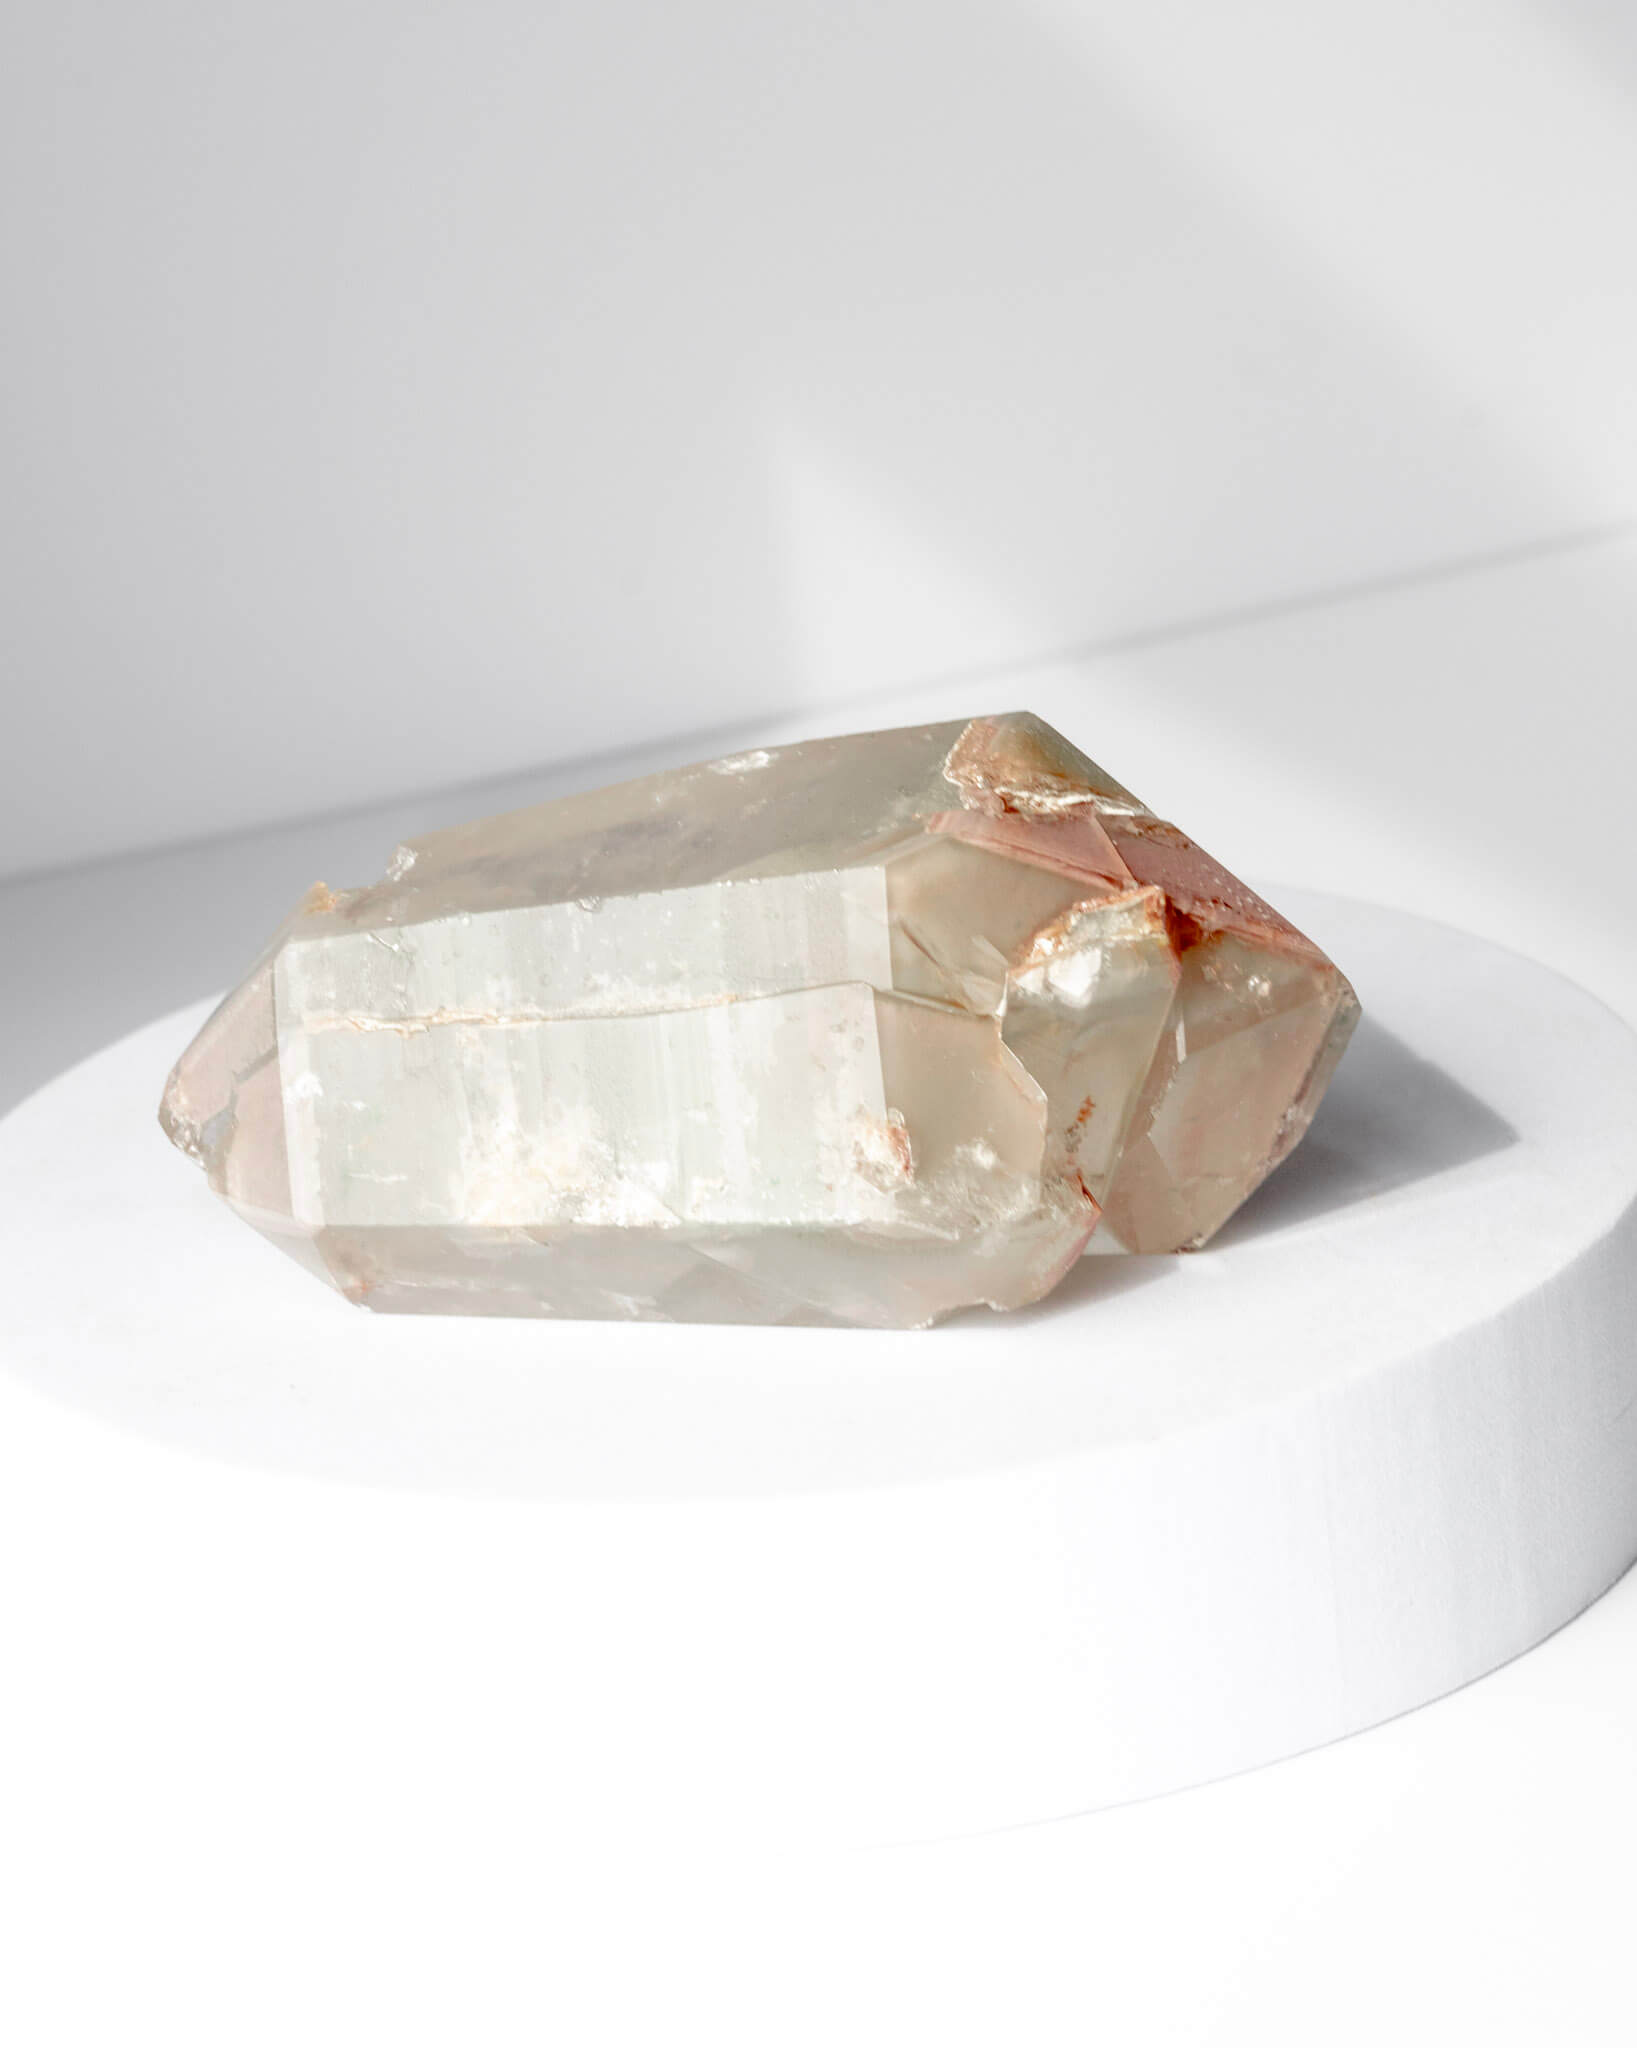 Hematite, Chlorite & Monazite Tower Healing Crystal